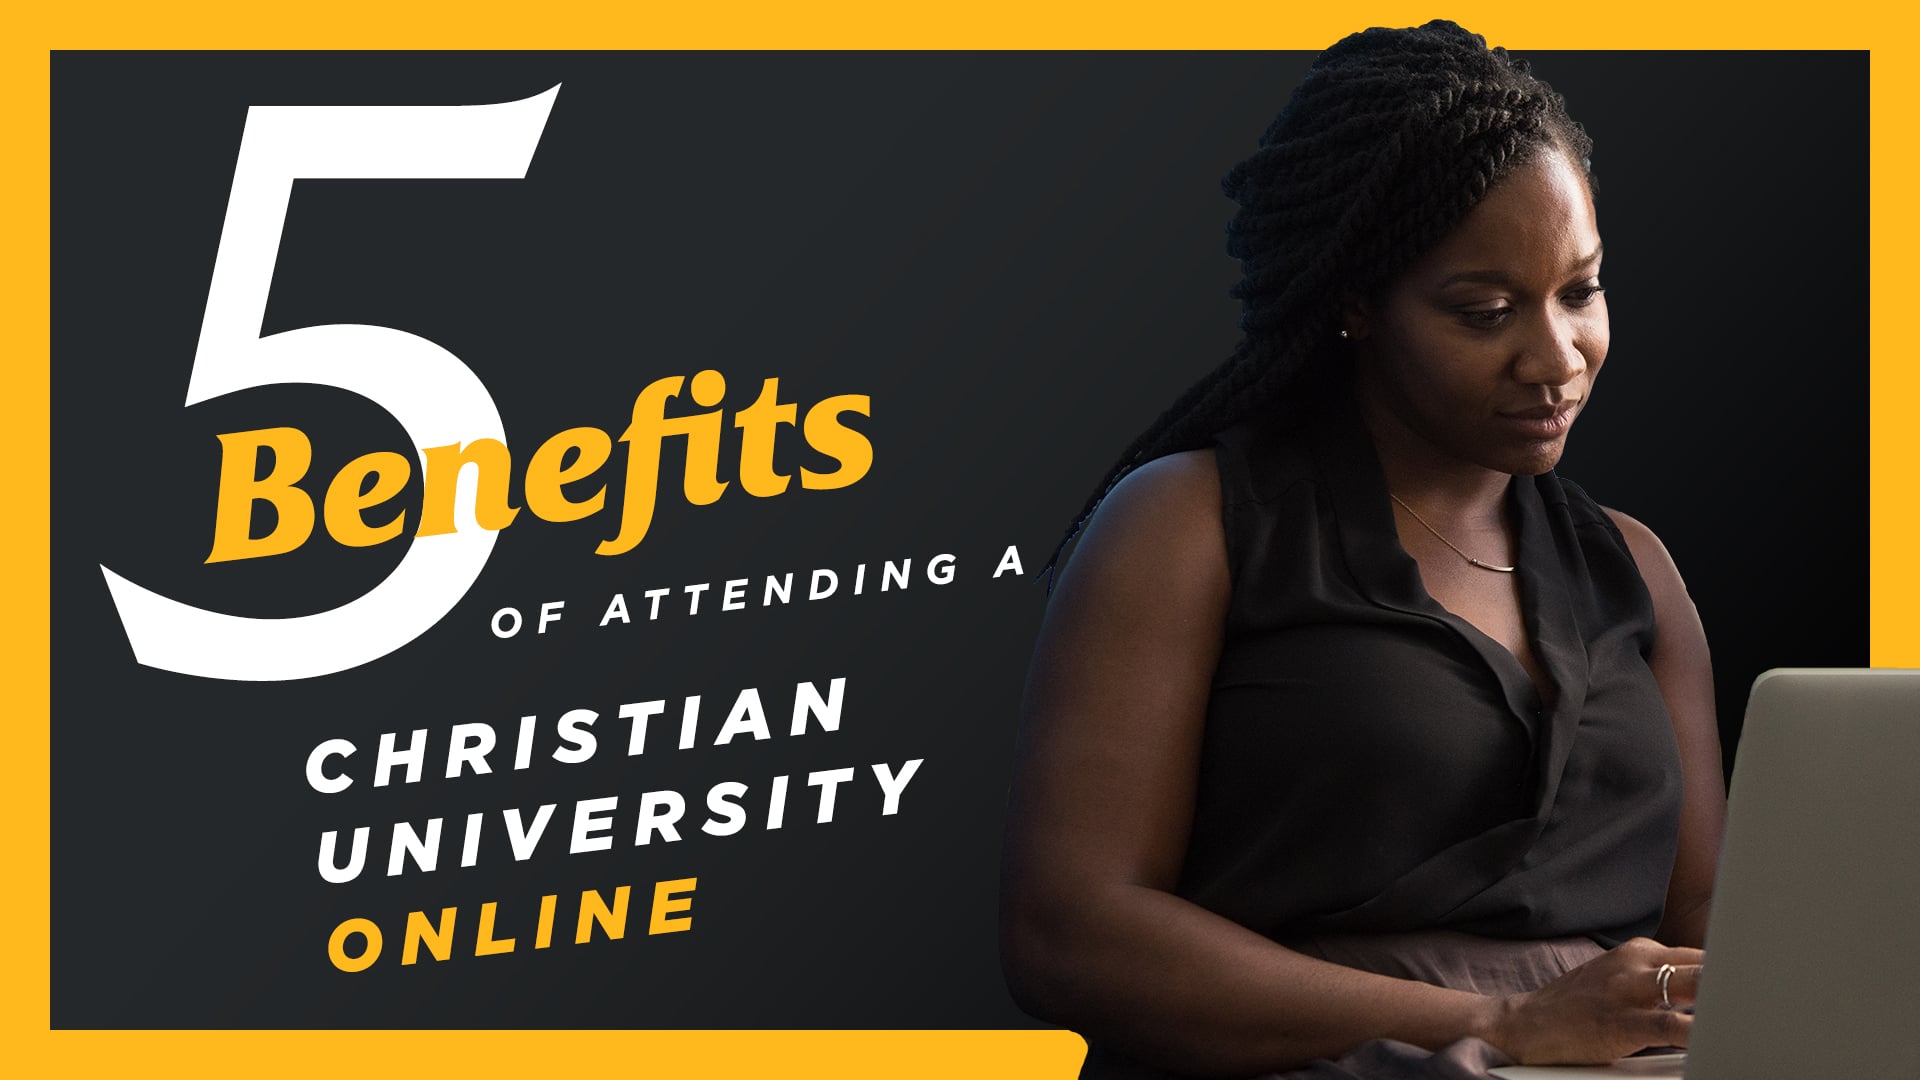 Christian-University-Online-5-Benefits-of-Attending